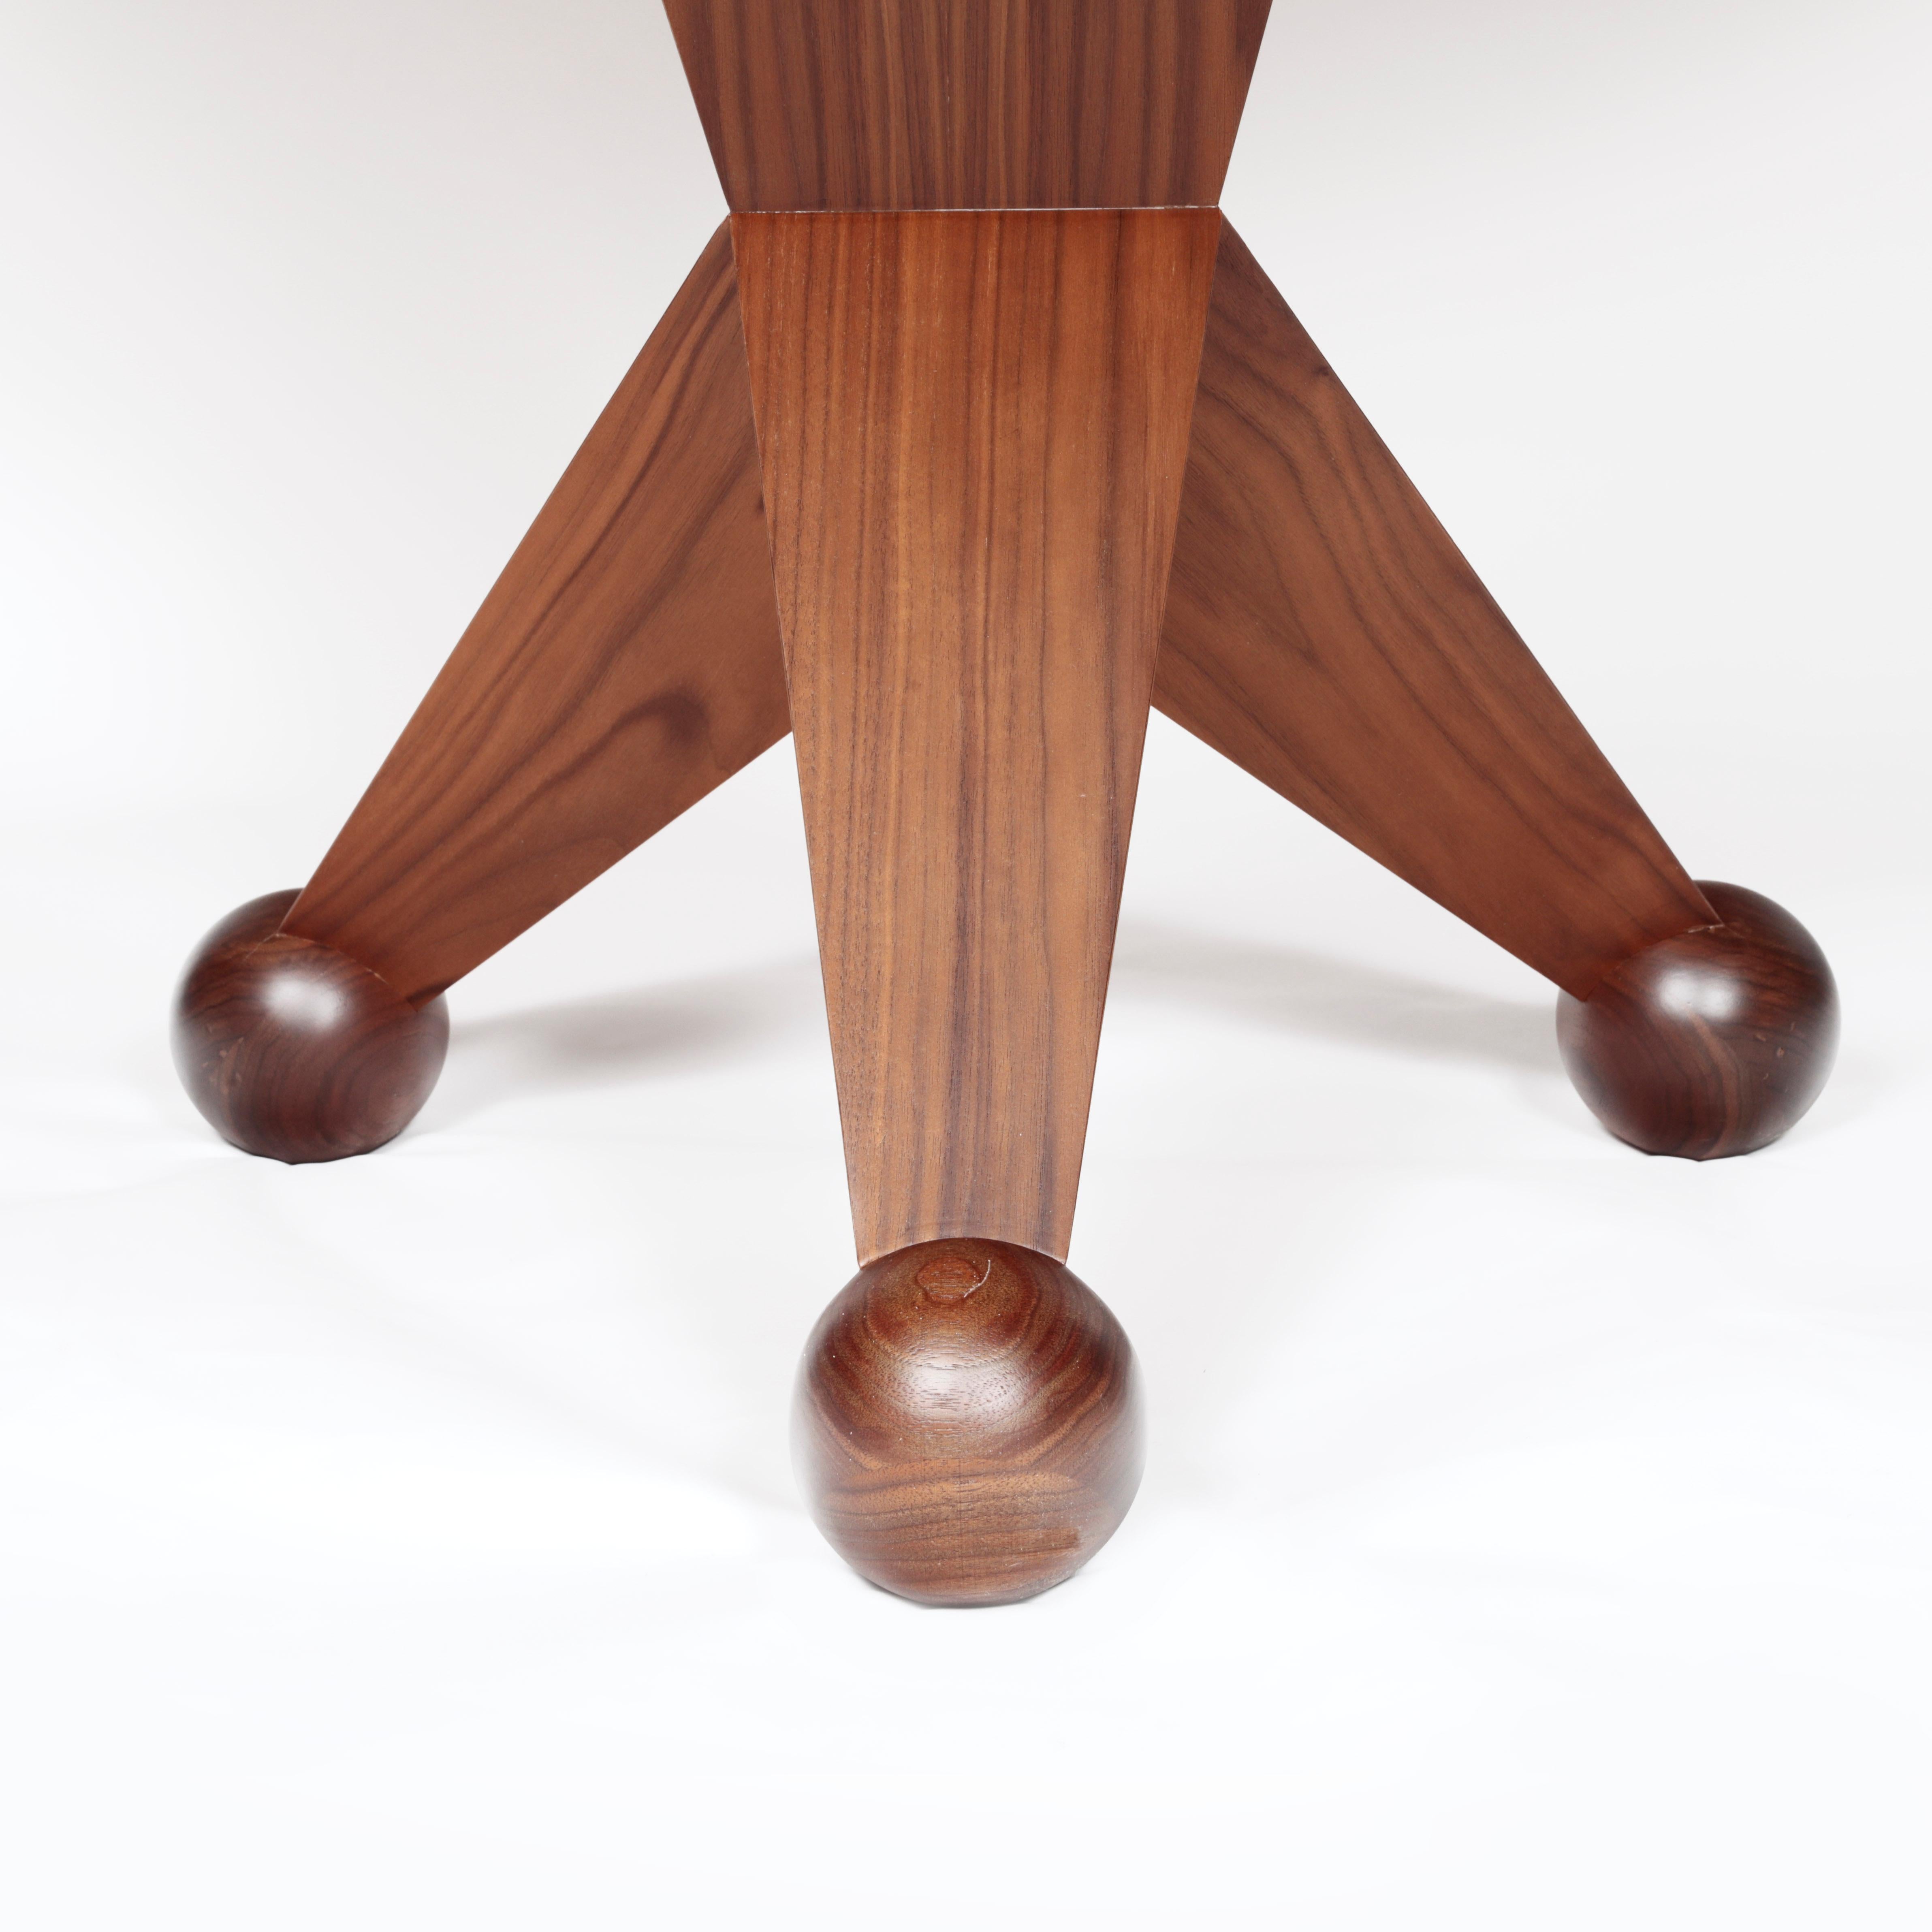 European Octogonal Solid Oak Triptych Leg Table from Laura Gonzalez Collection